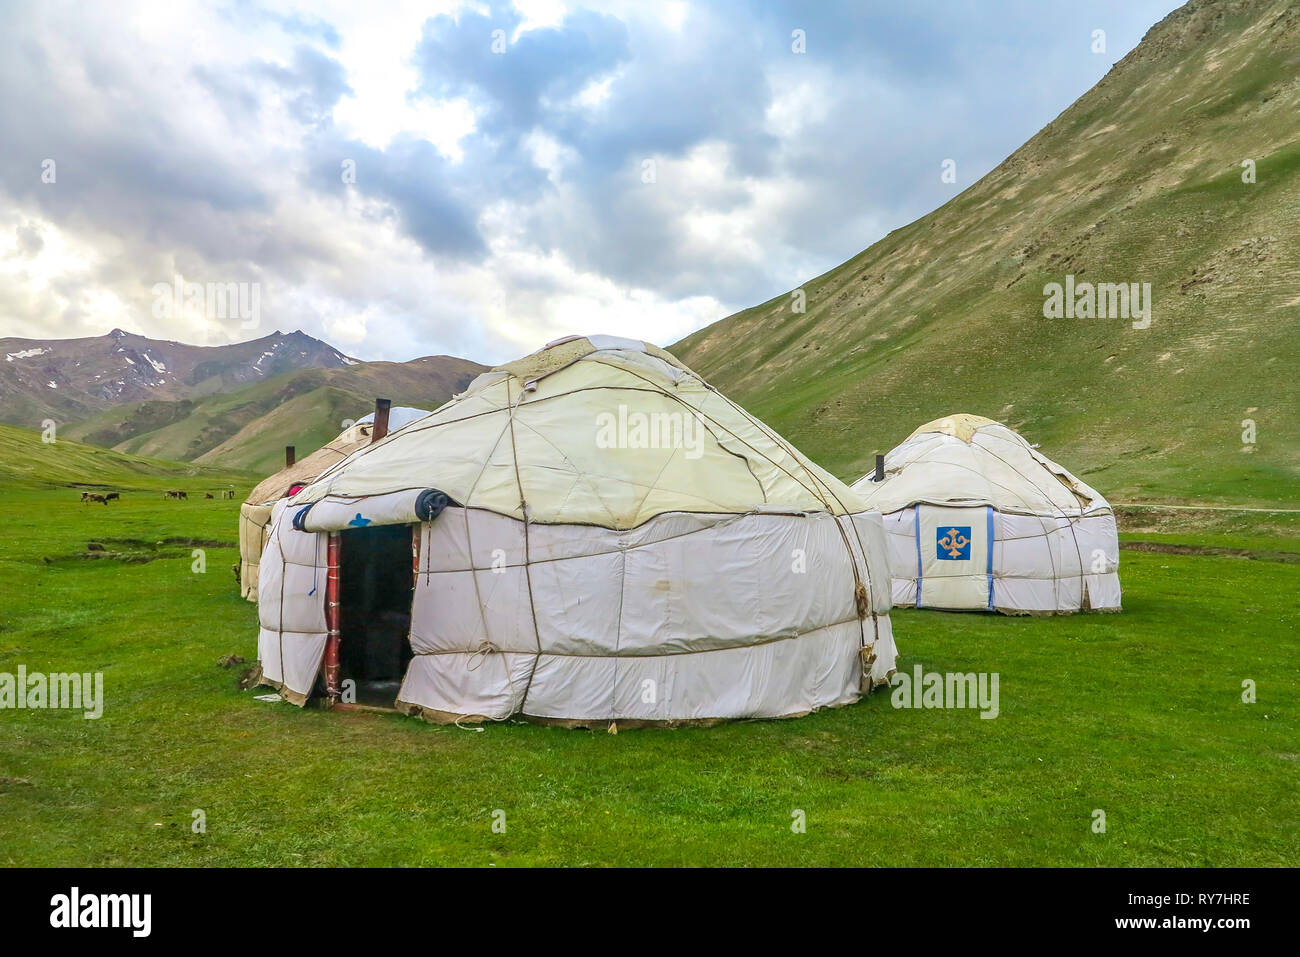 Tash Rabat Caravanserai Traditional White Colored Kyrgyz Yurt Camp with Ornament and Landscape Stock Photo